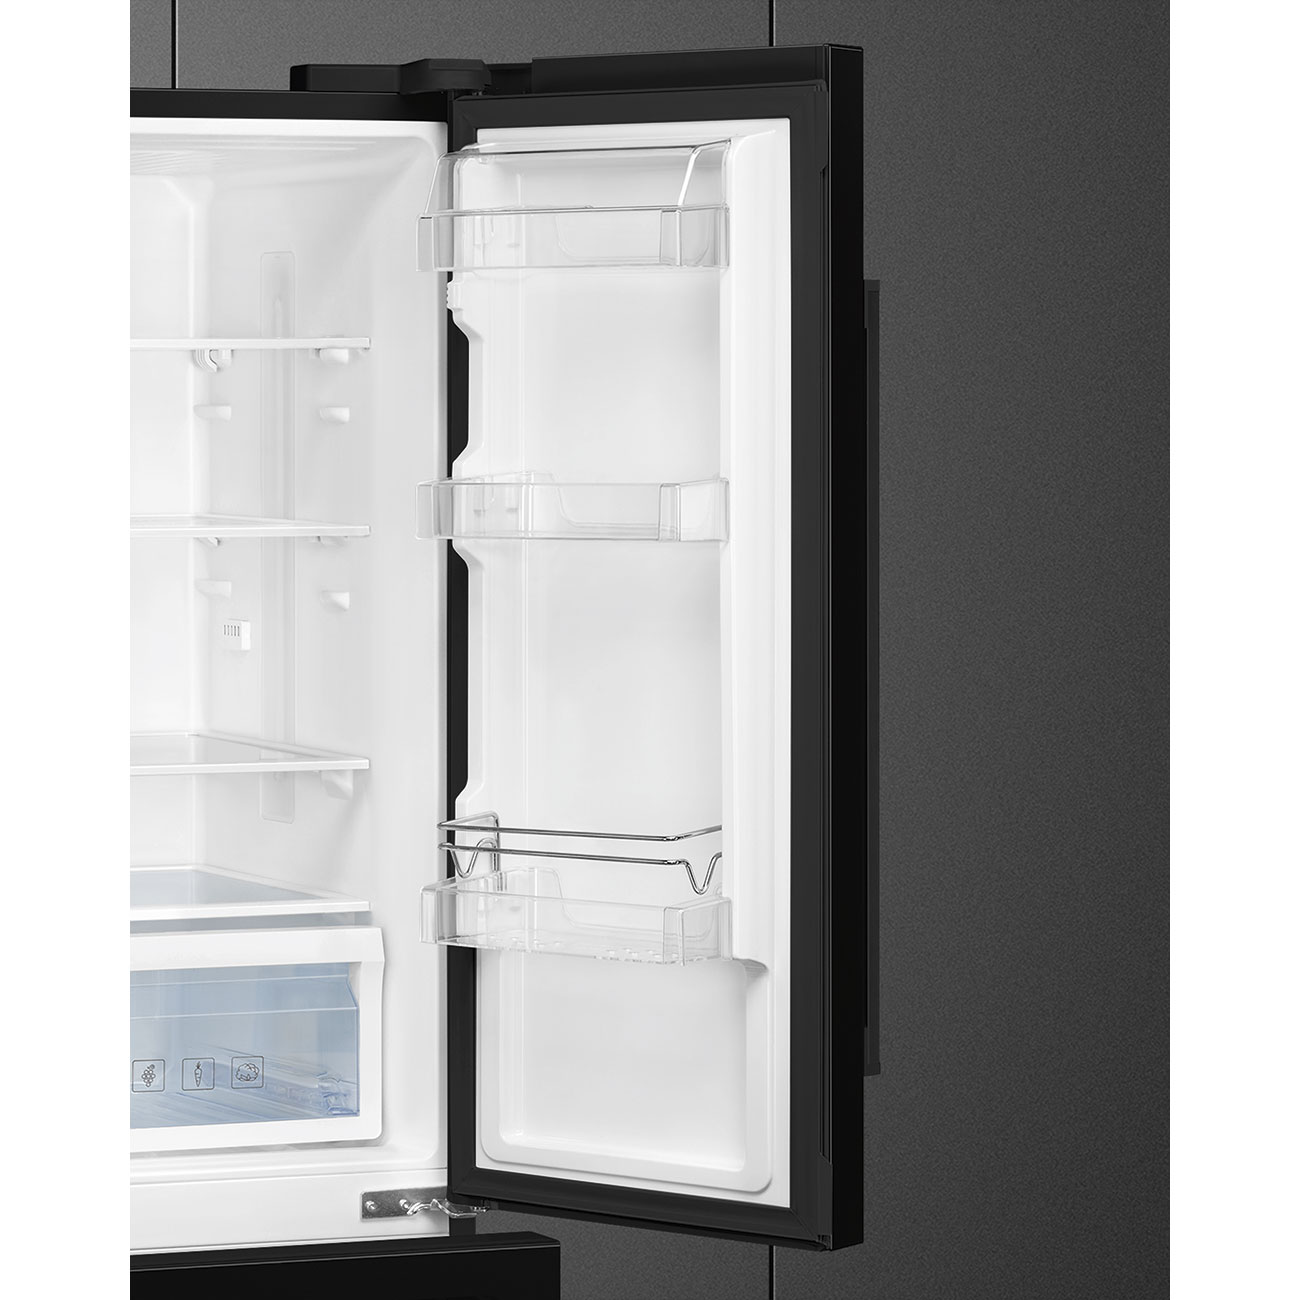 2 Doors & 2 Drawers Free standing refrigerator - Smeg_8